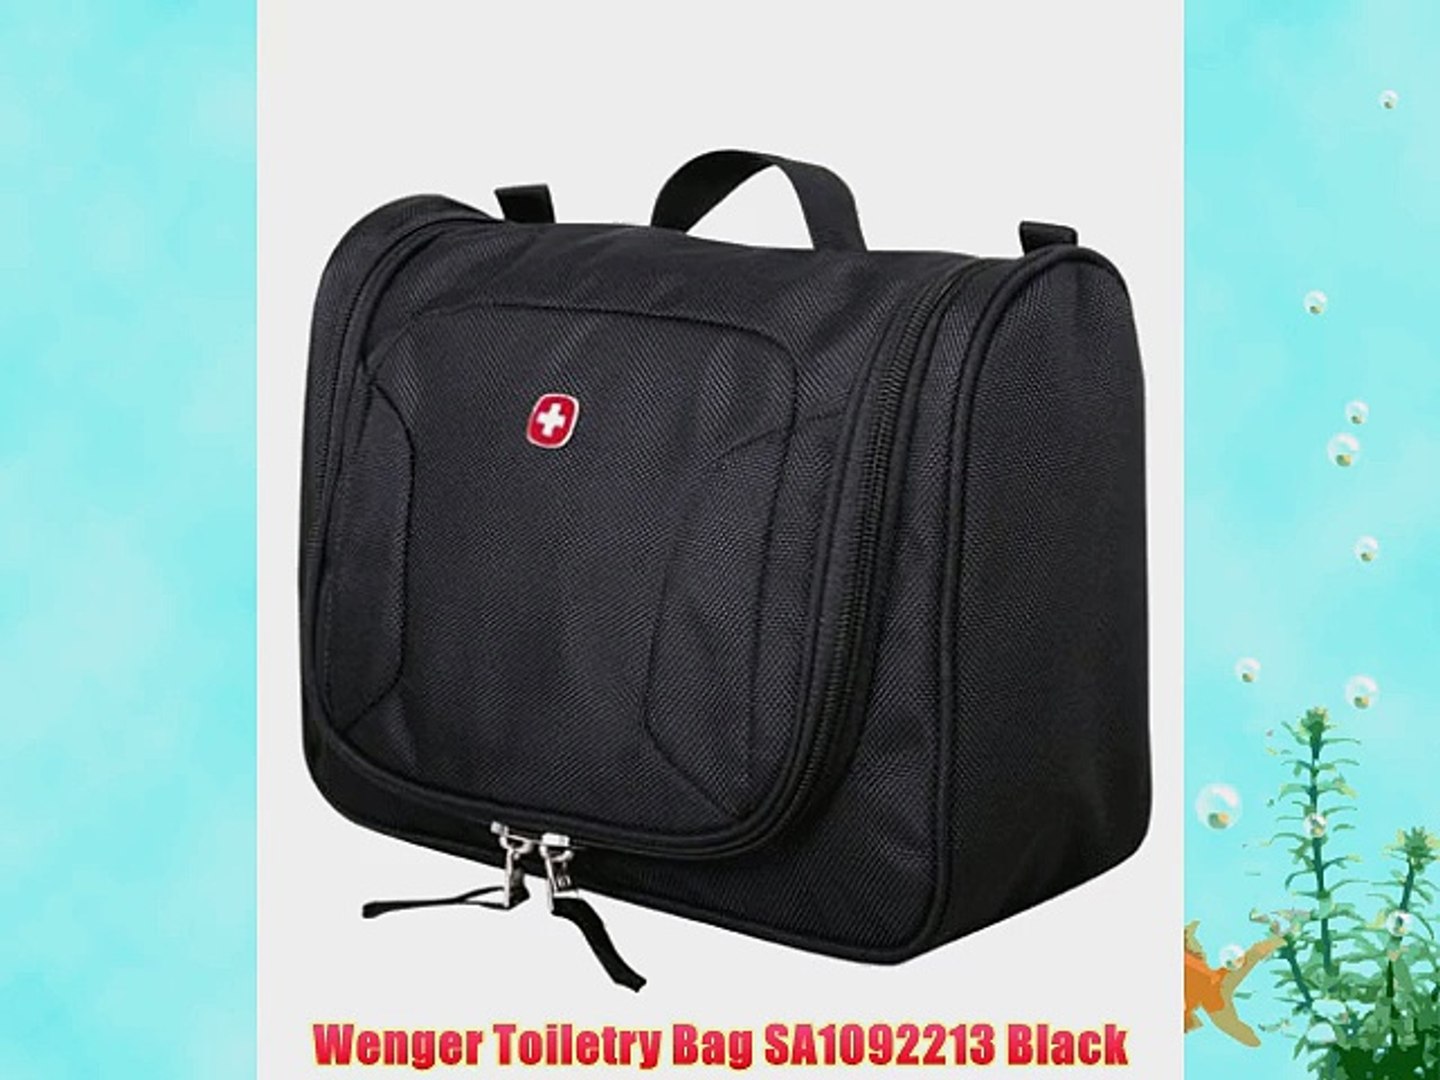 Wenger Toiletry Bag SA1092213 Black - video Dailymotion